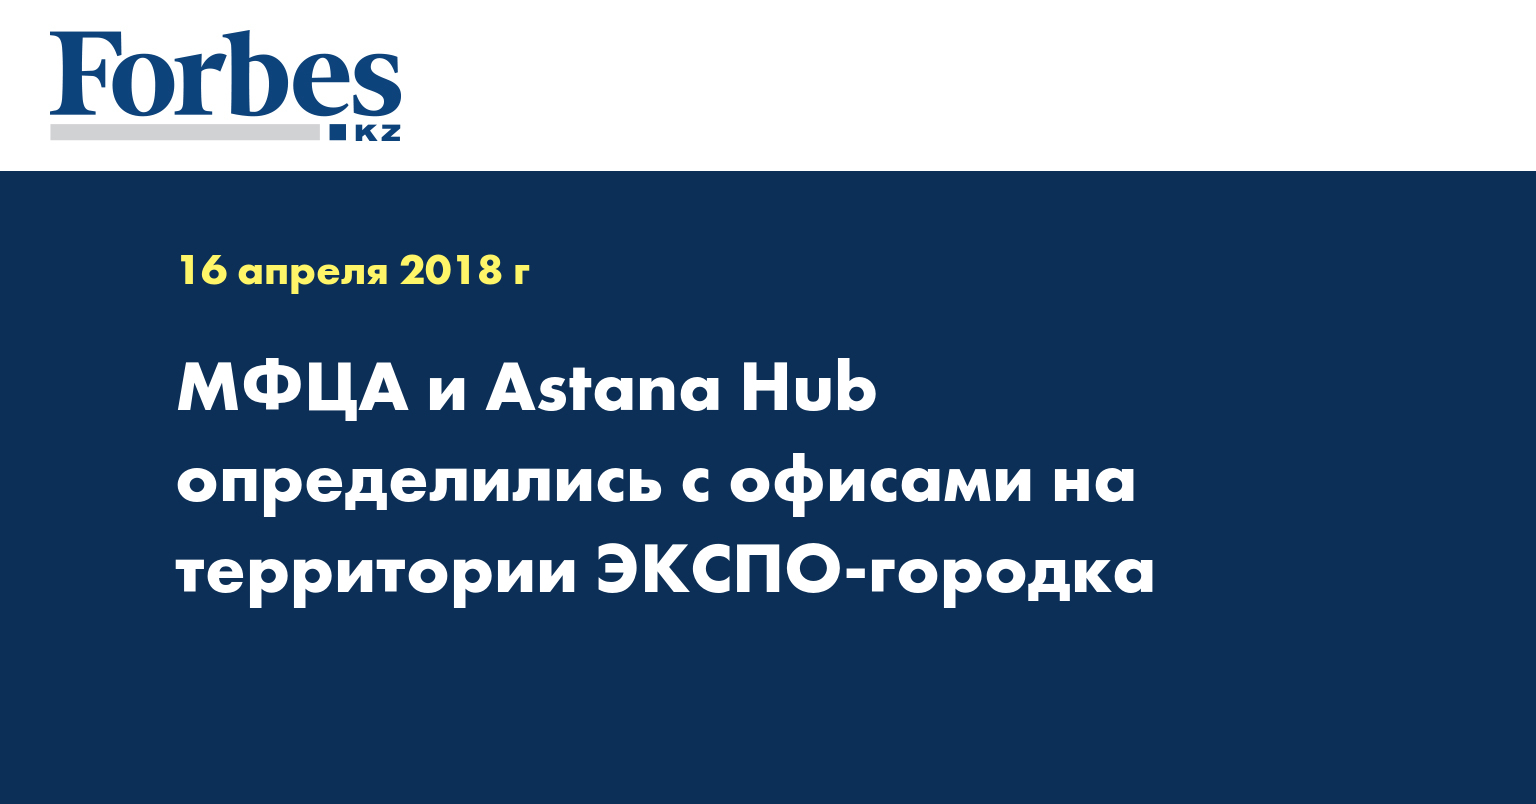 МФЦА и Astana Hub определились с офисами на территории ЭКСПО-городка